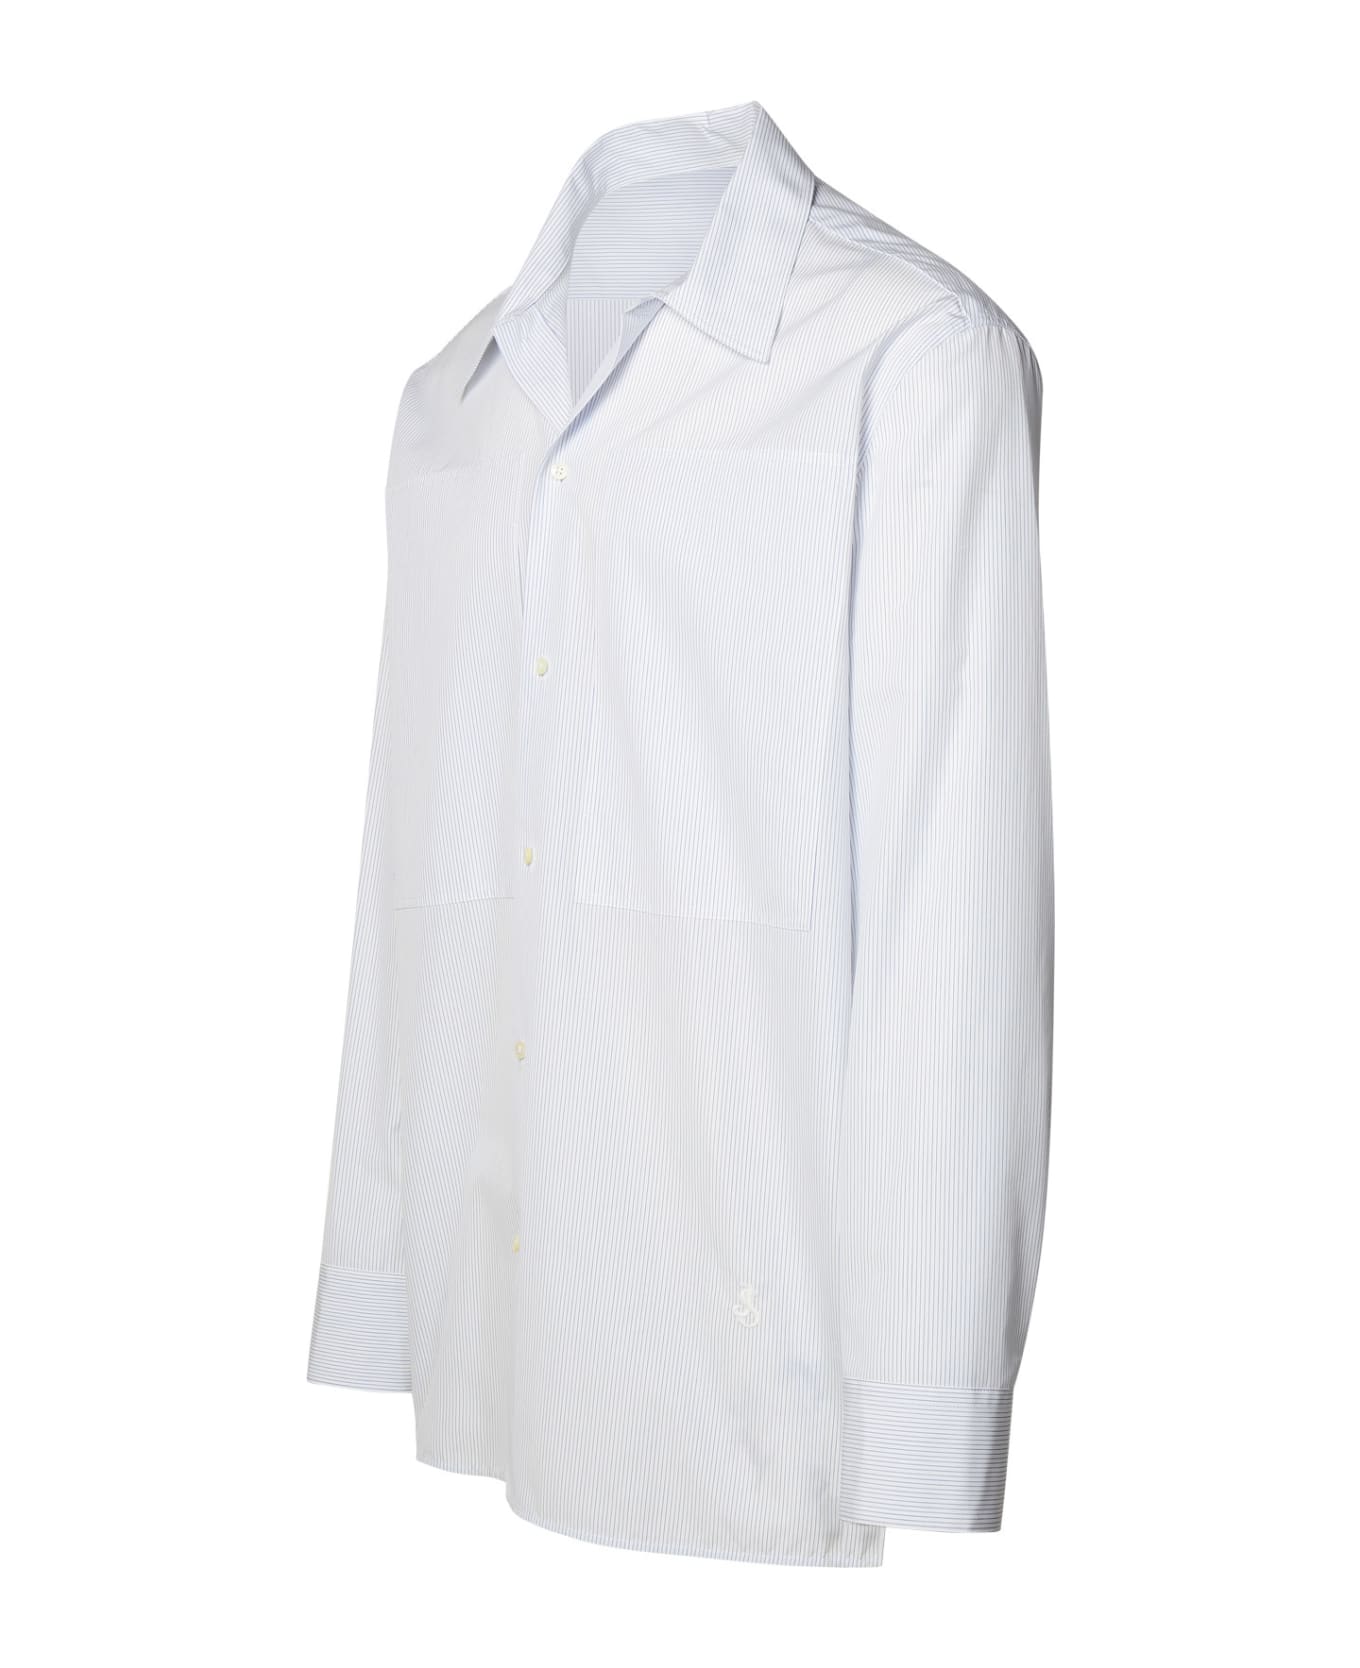 Jil Sander 'tuesday' White Cotton Shirt - White